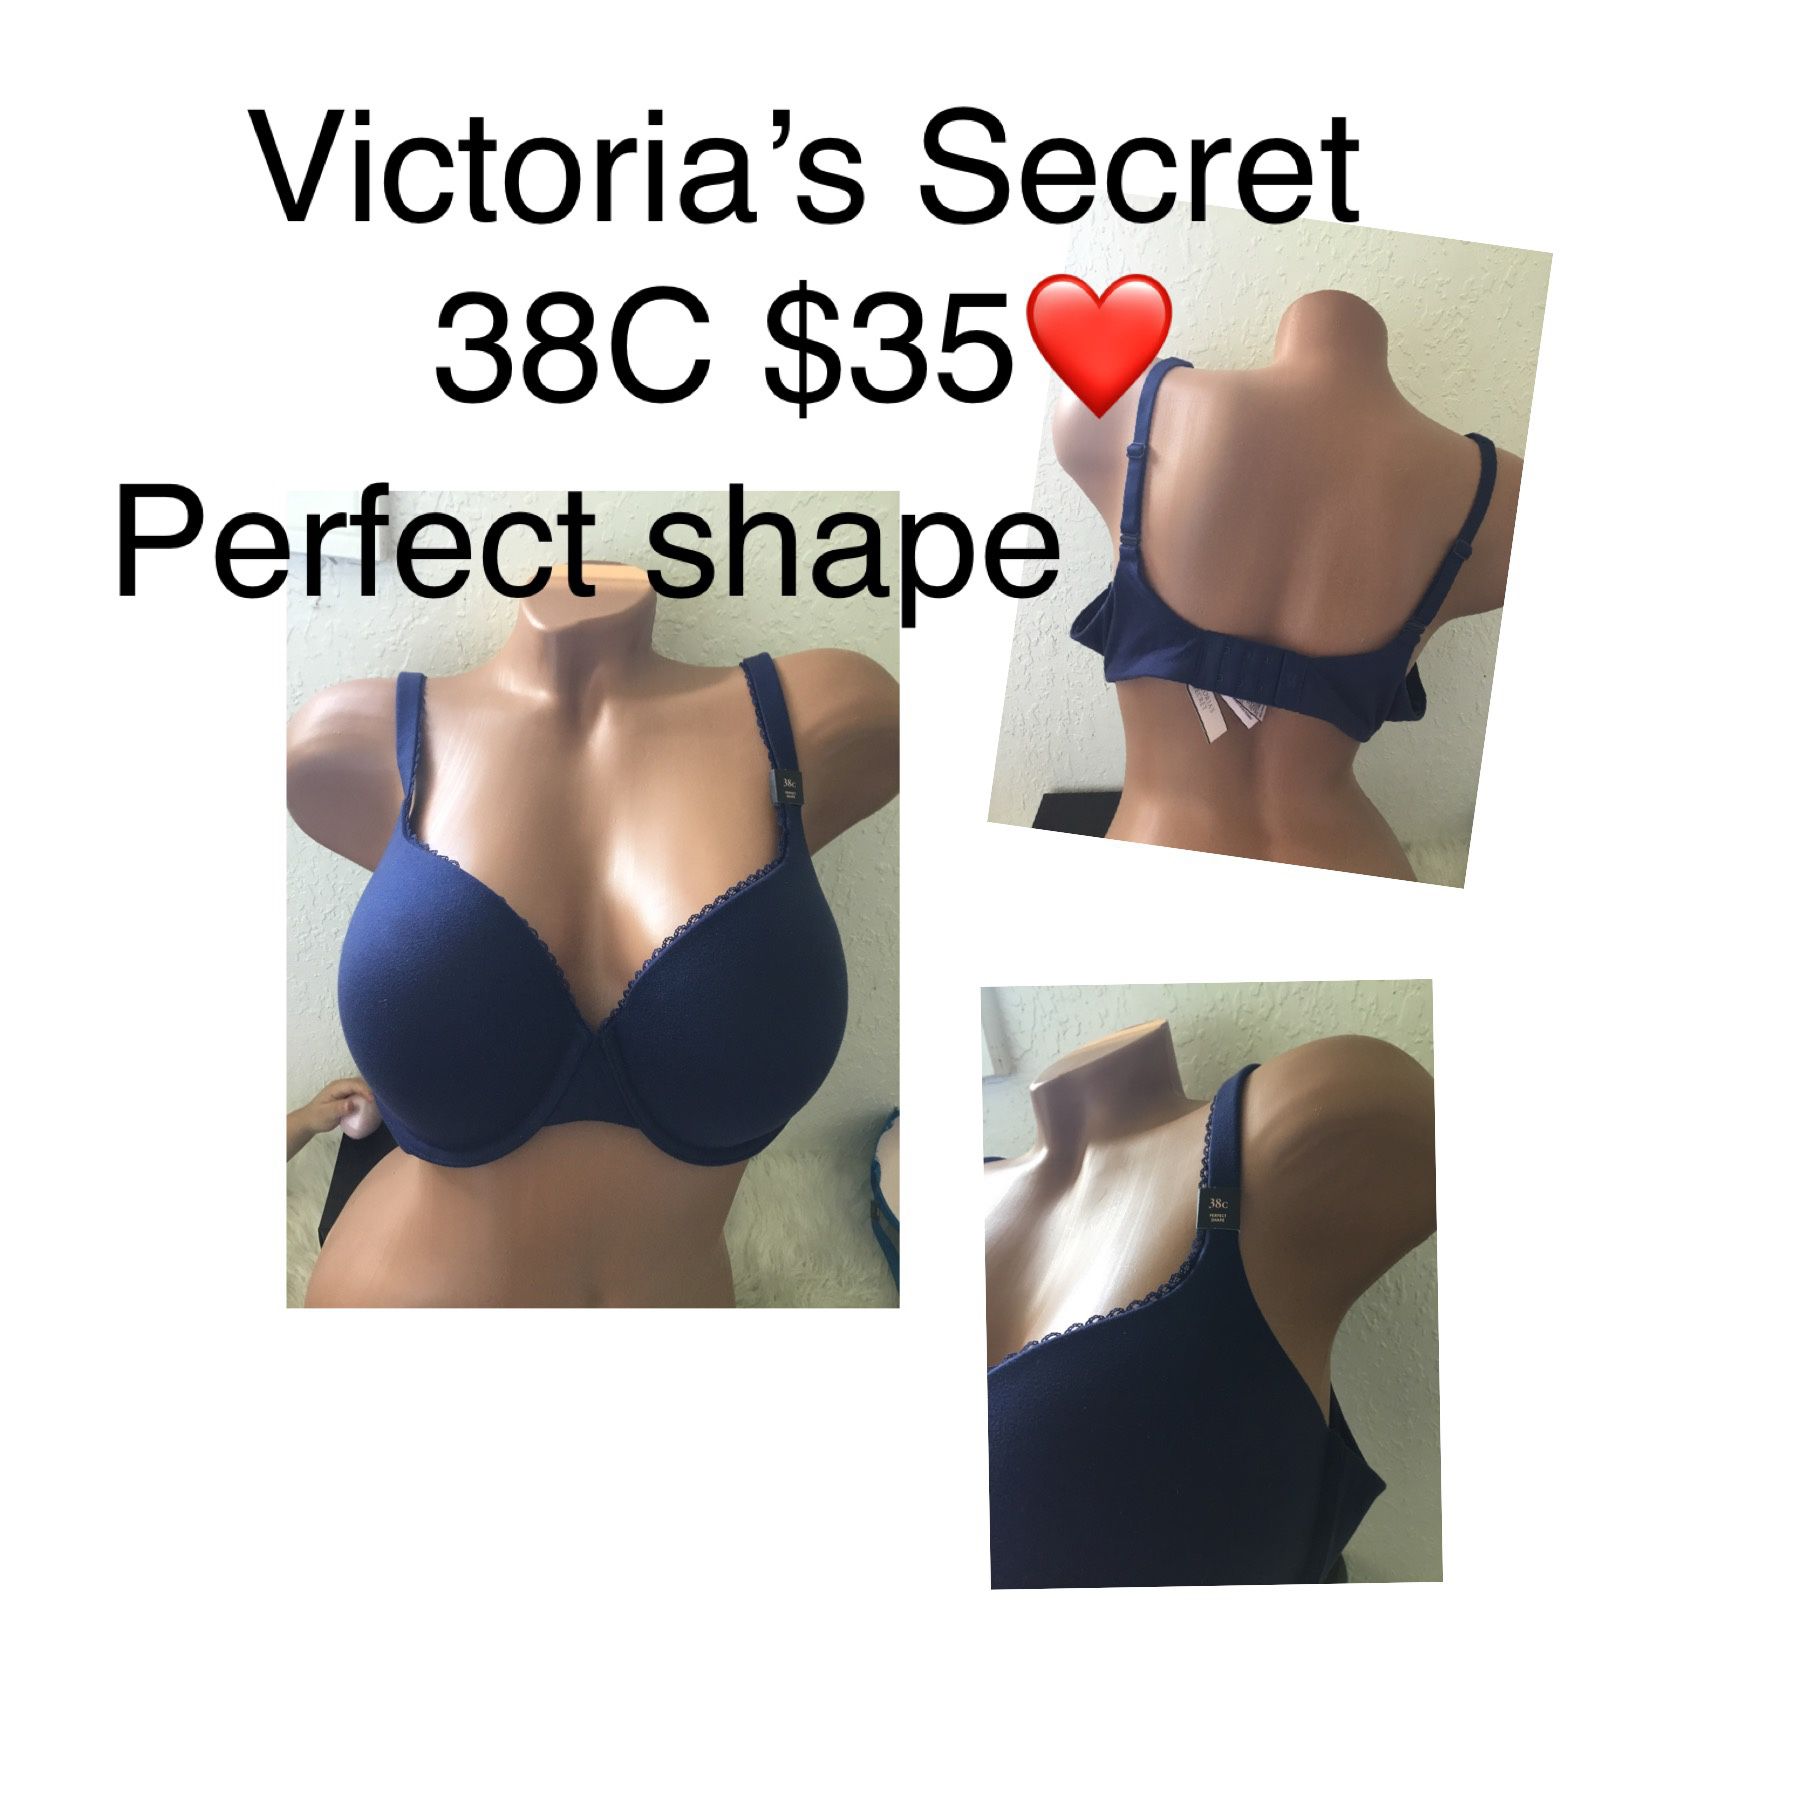 VICTORIA'S SECRET BODY BY VICTORIA 38DD Long Line Demi Bra in Black Garden  Lace for Sale in Davenport, FL - OfferUp